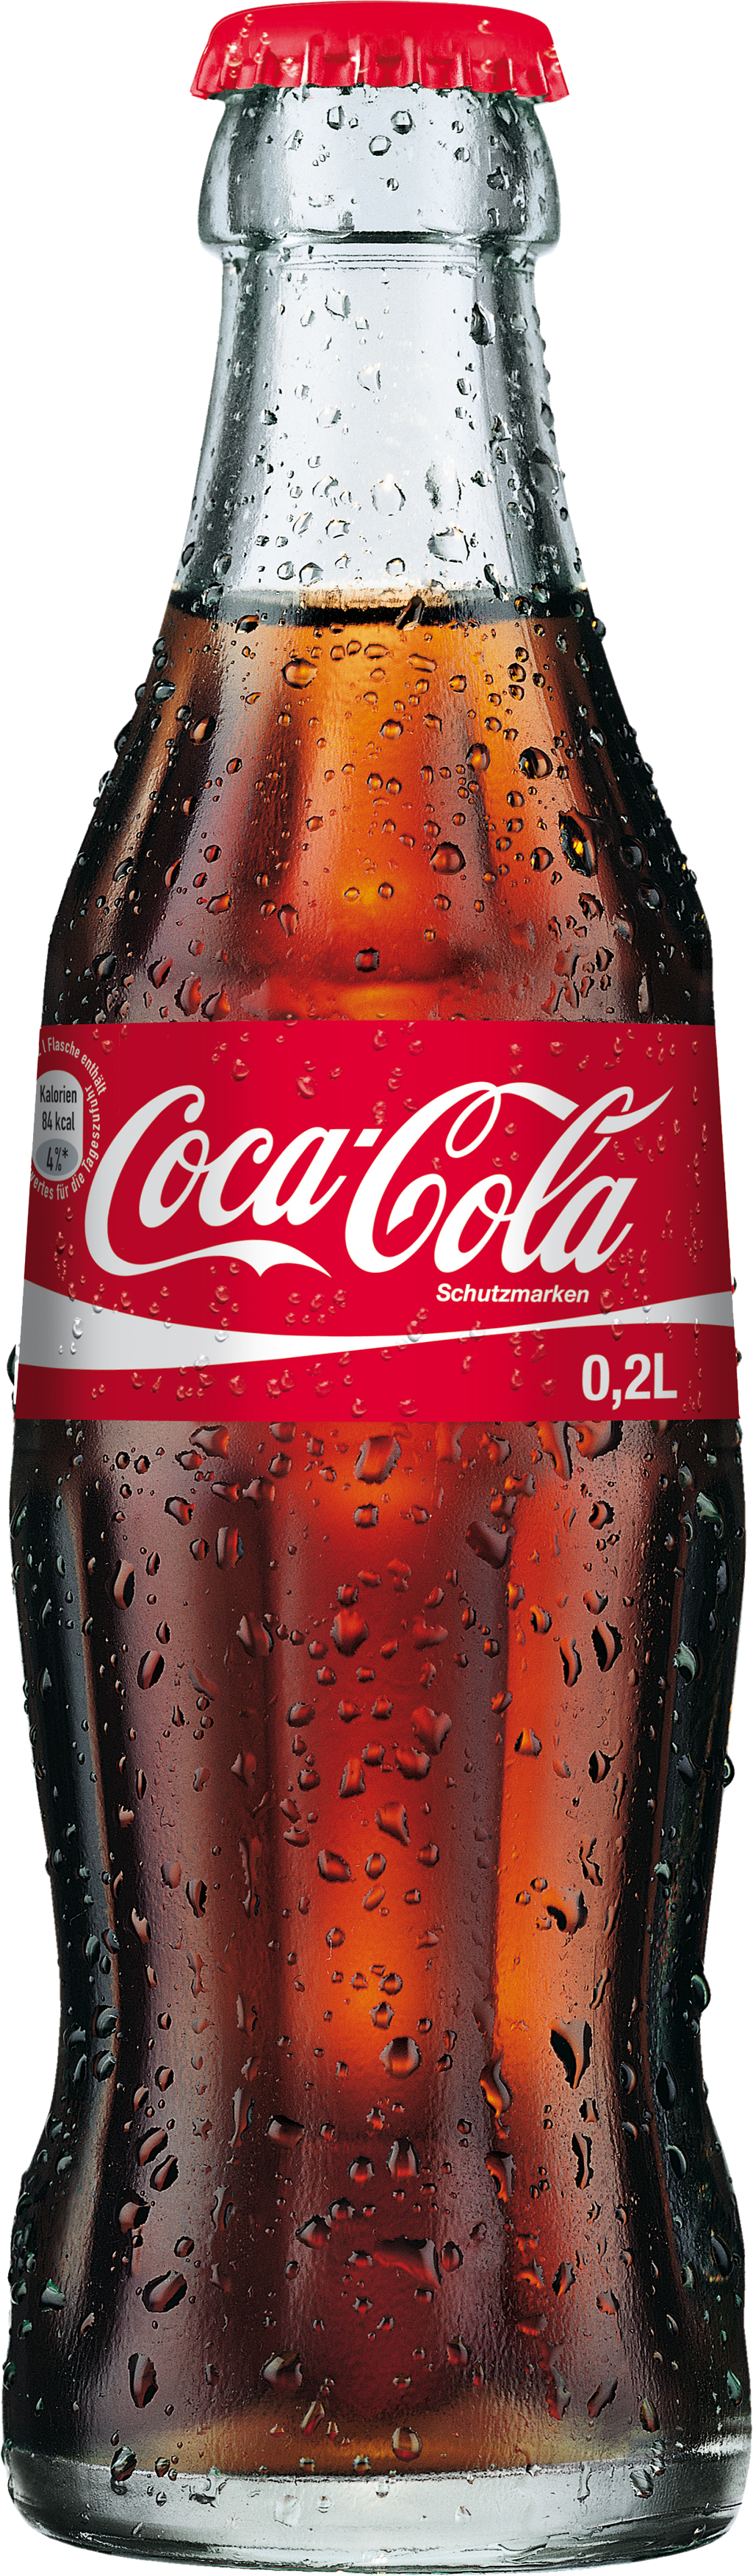 Coca Cola Bottle PNG Image